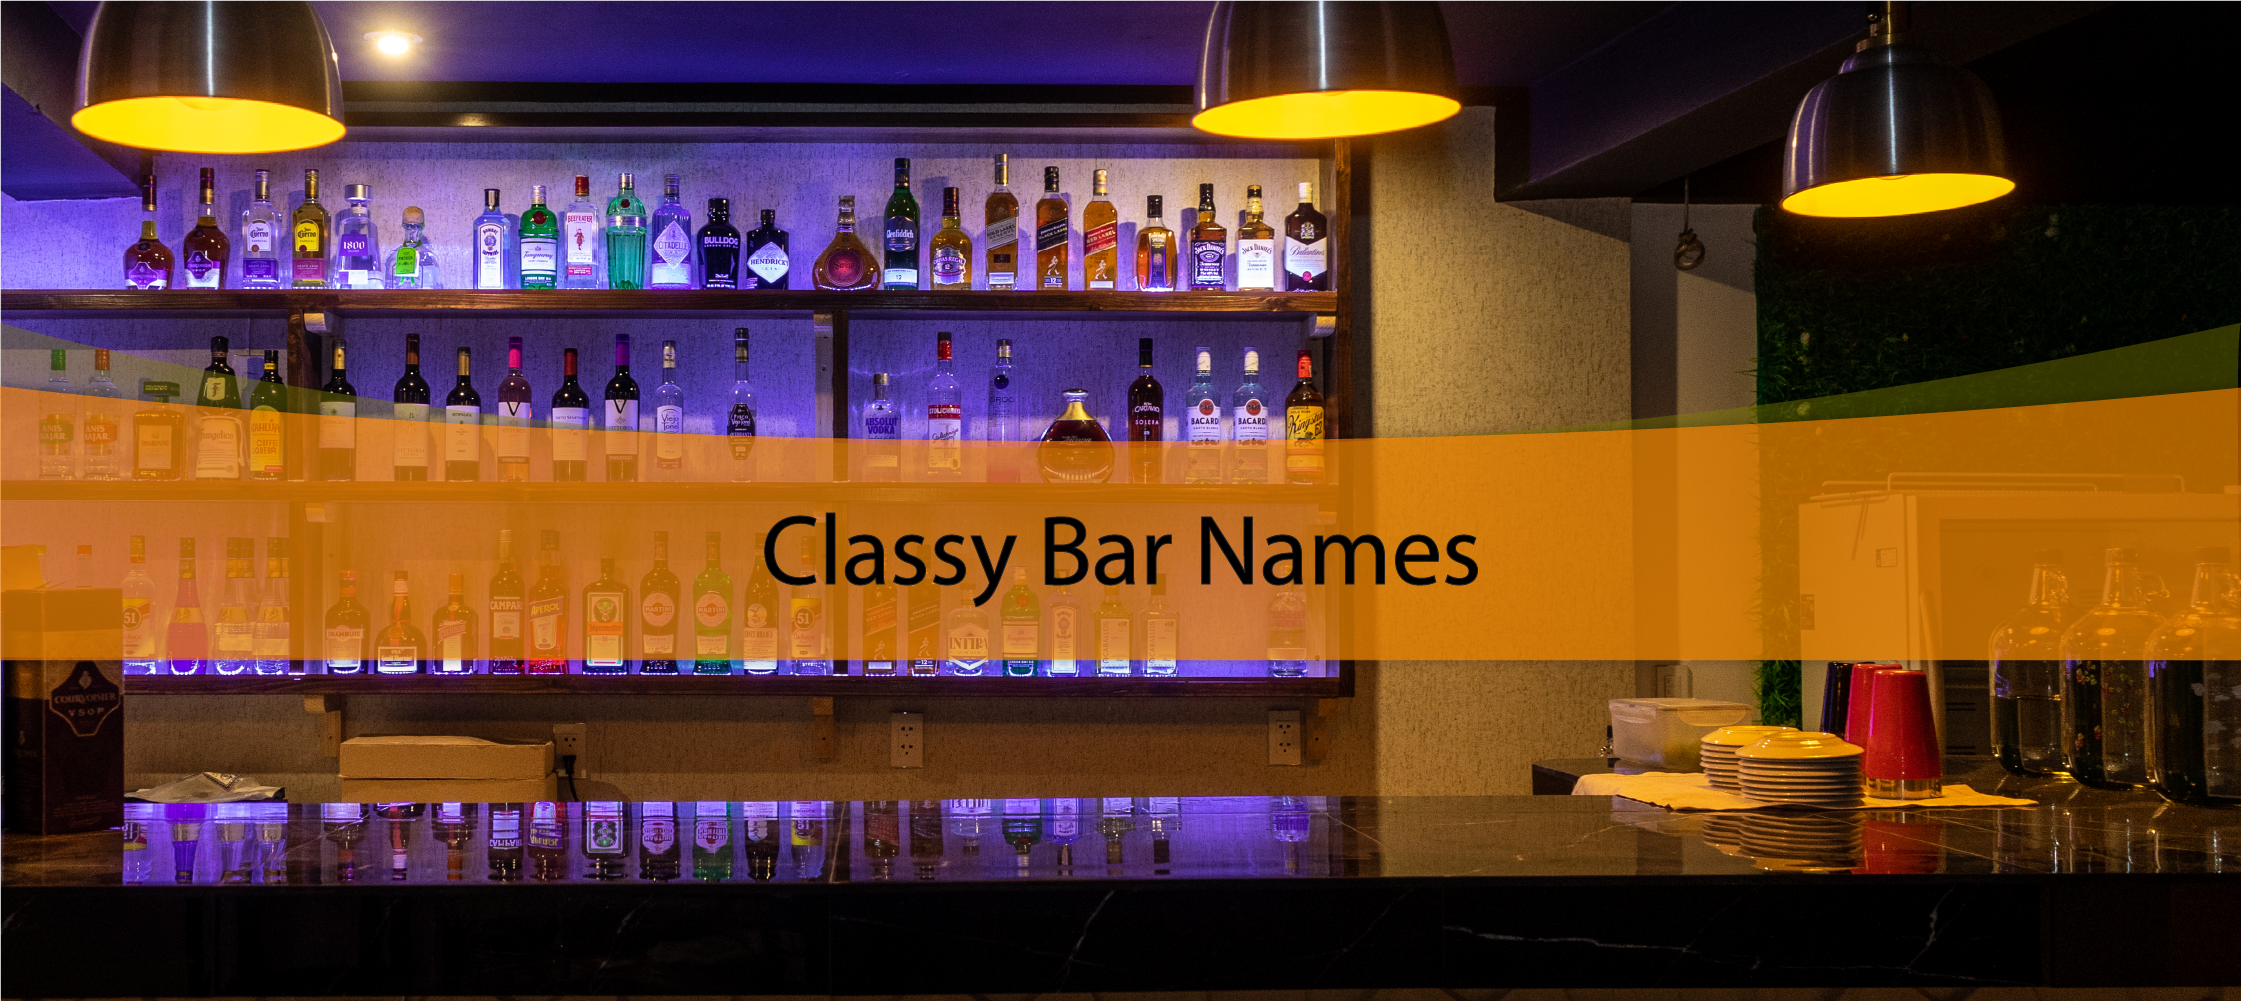 Classy Bar Names